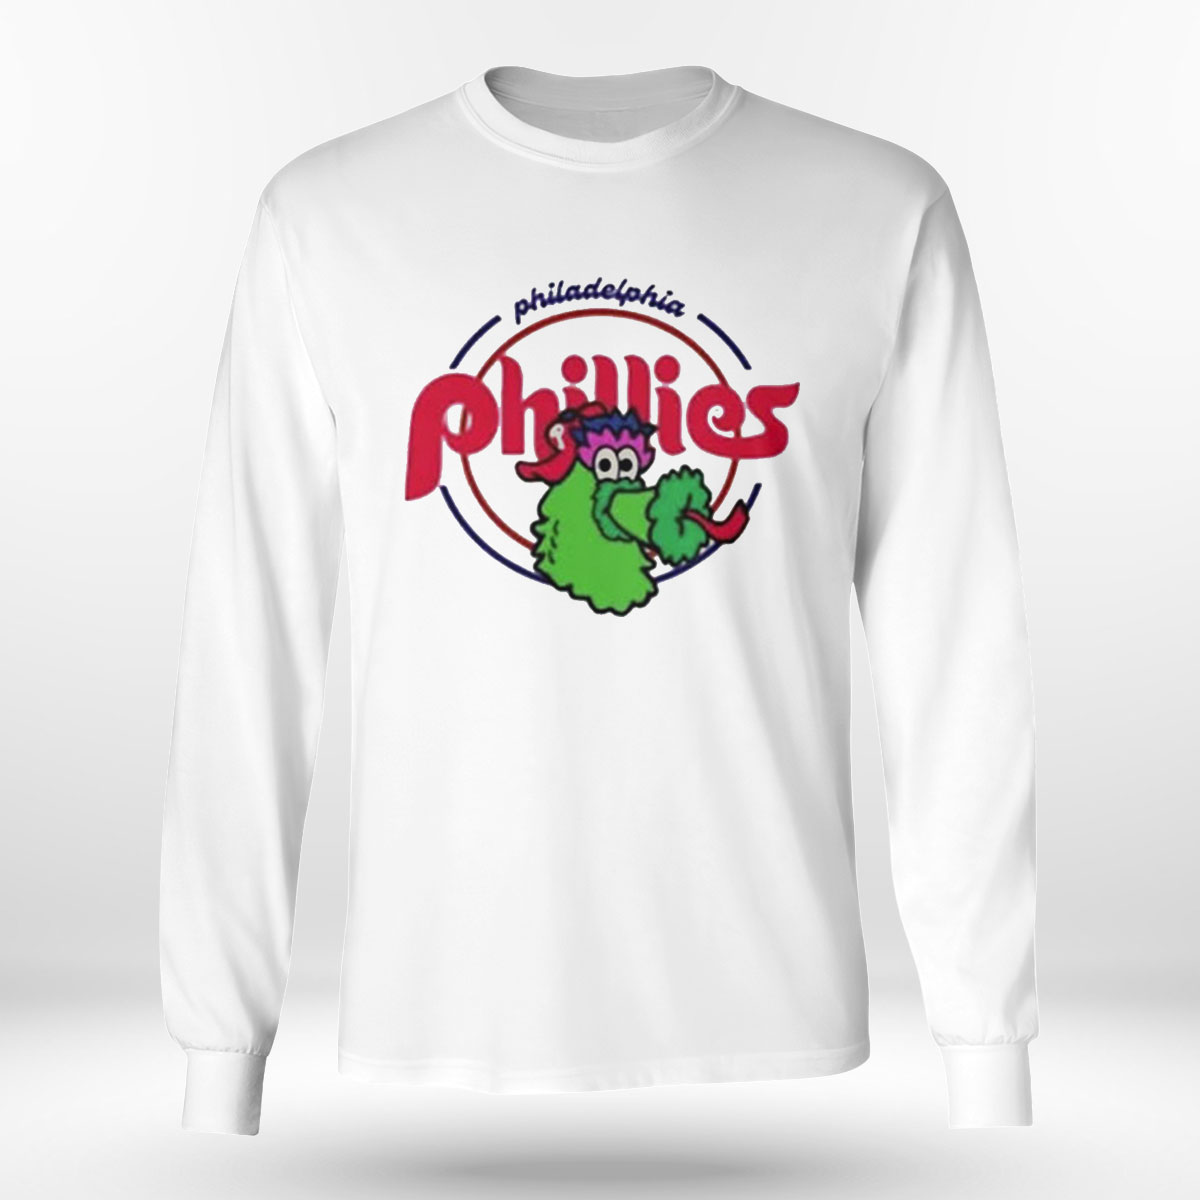 Mlb Fighting Baseball Philadelphia Phillies Phanatic T Shirt Hot